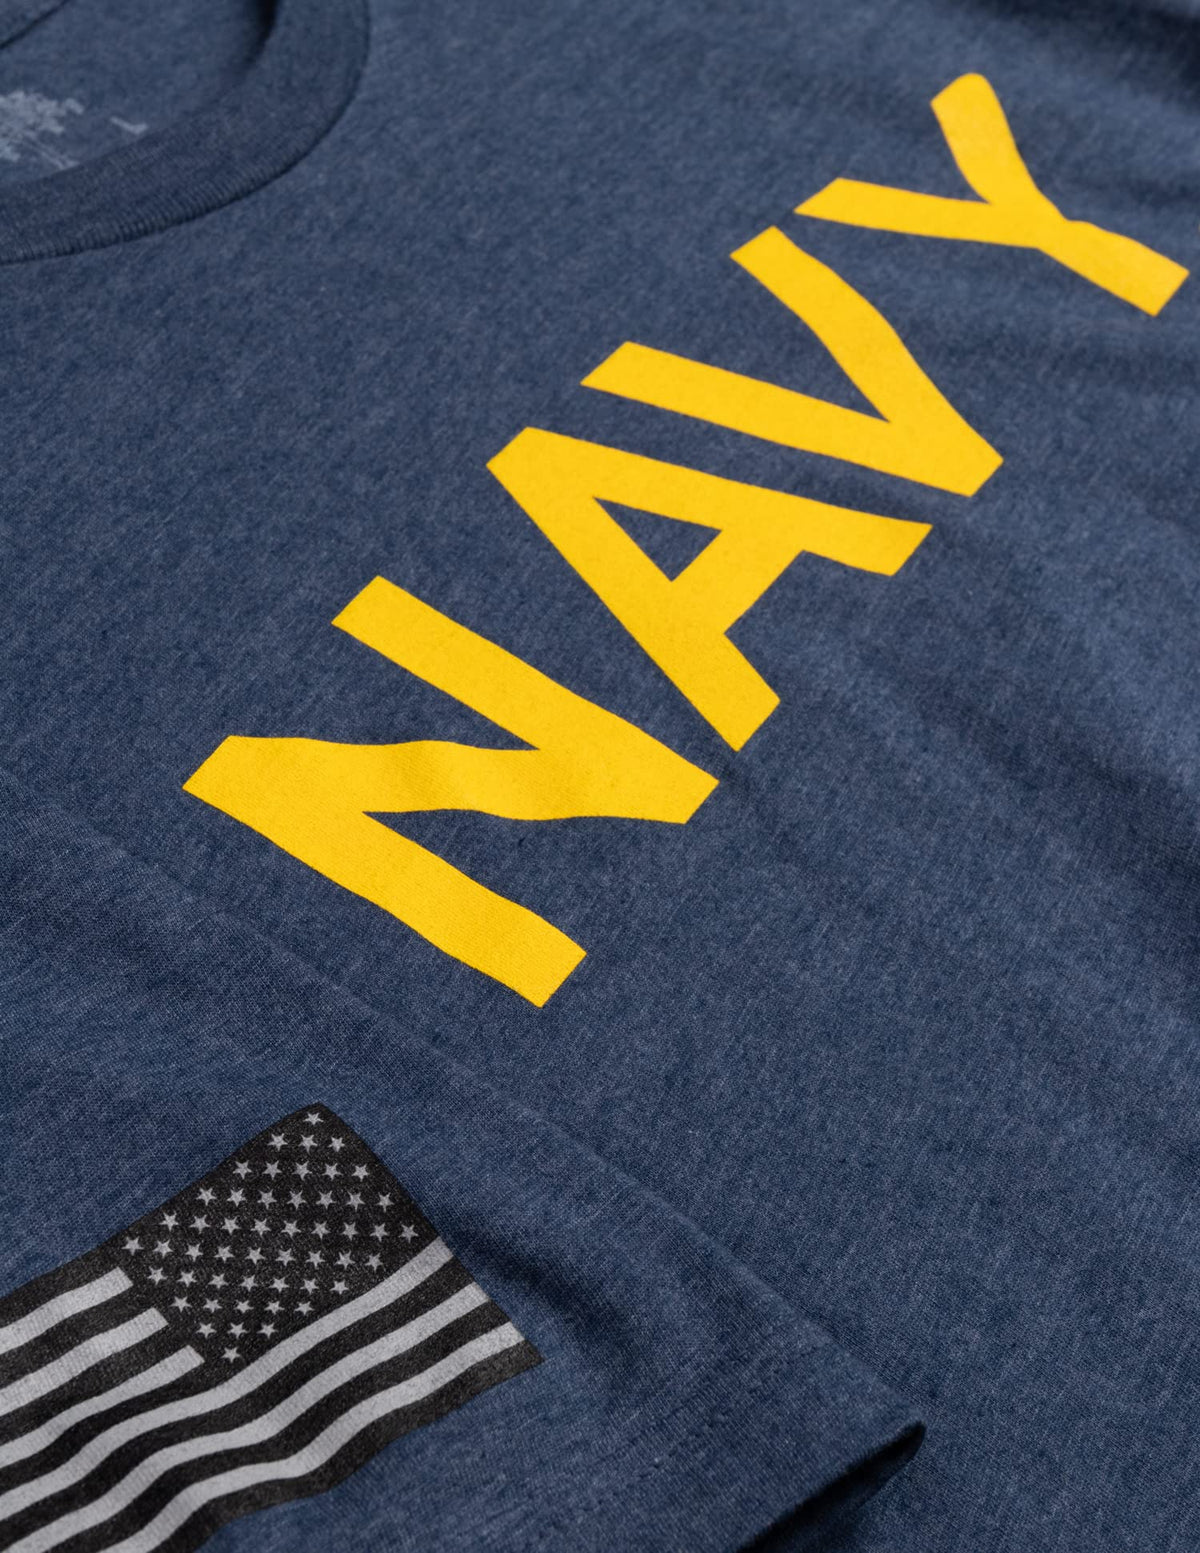 USS Tucson, SSN-770 | U.S. Navy Sailor Veteran USN United States Naval T-shirt for Men Women